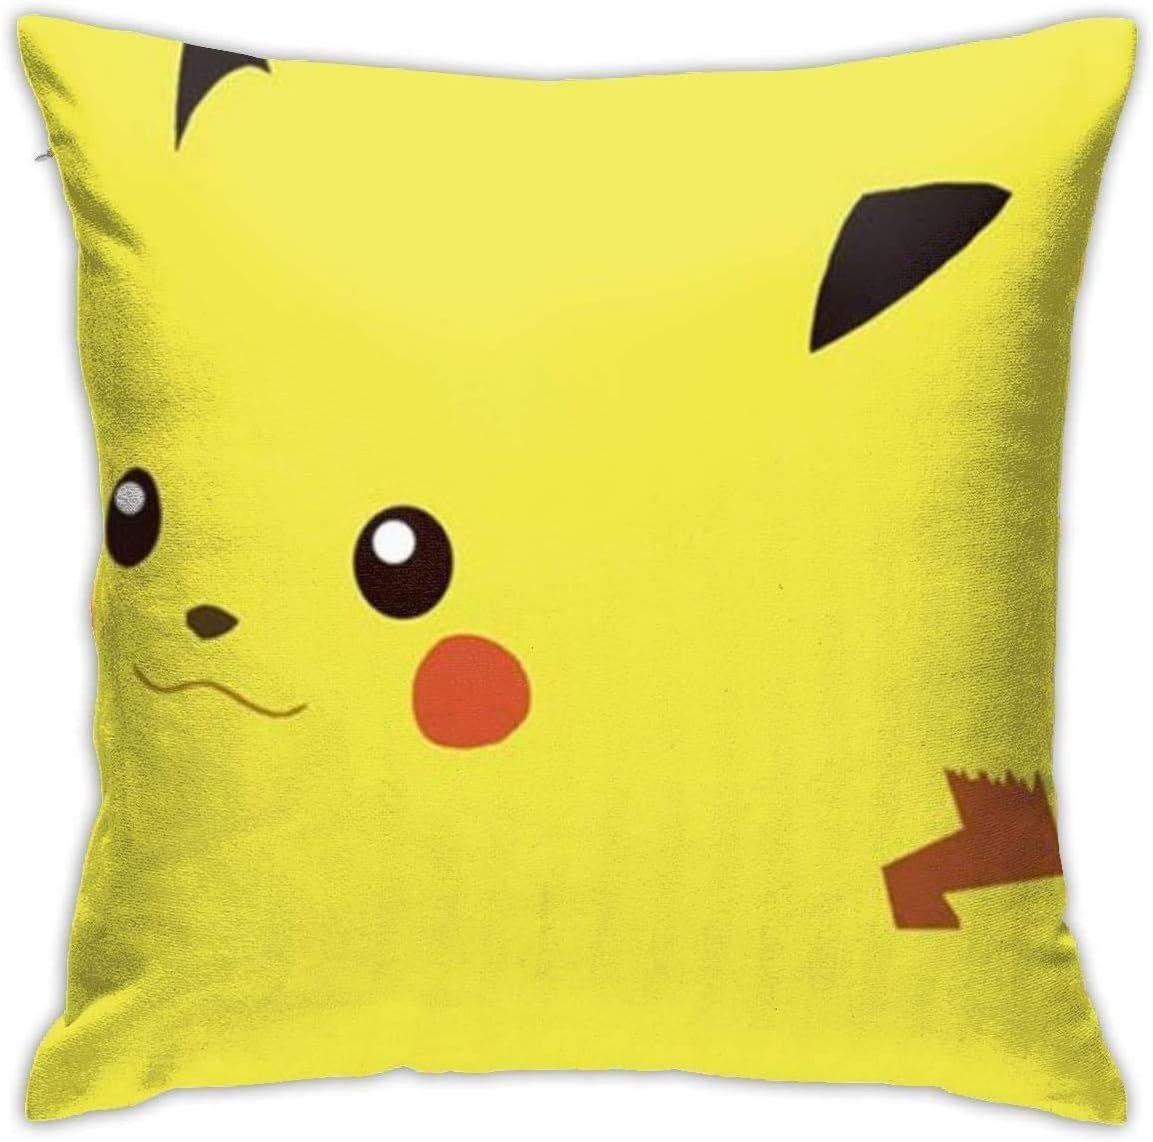 Coussin Pokemon | Oreiller Pikachu | Acheter coussin Pikachu pas cher